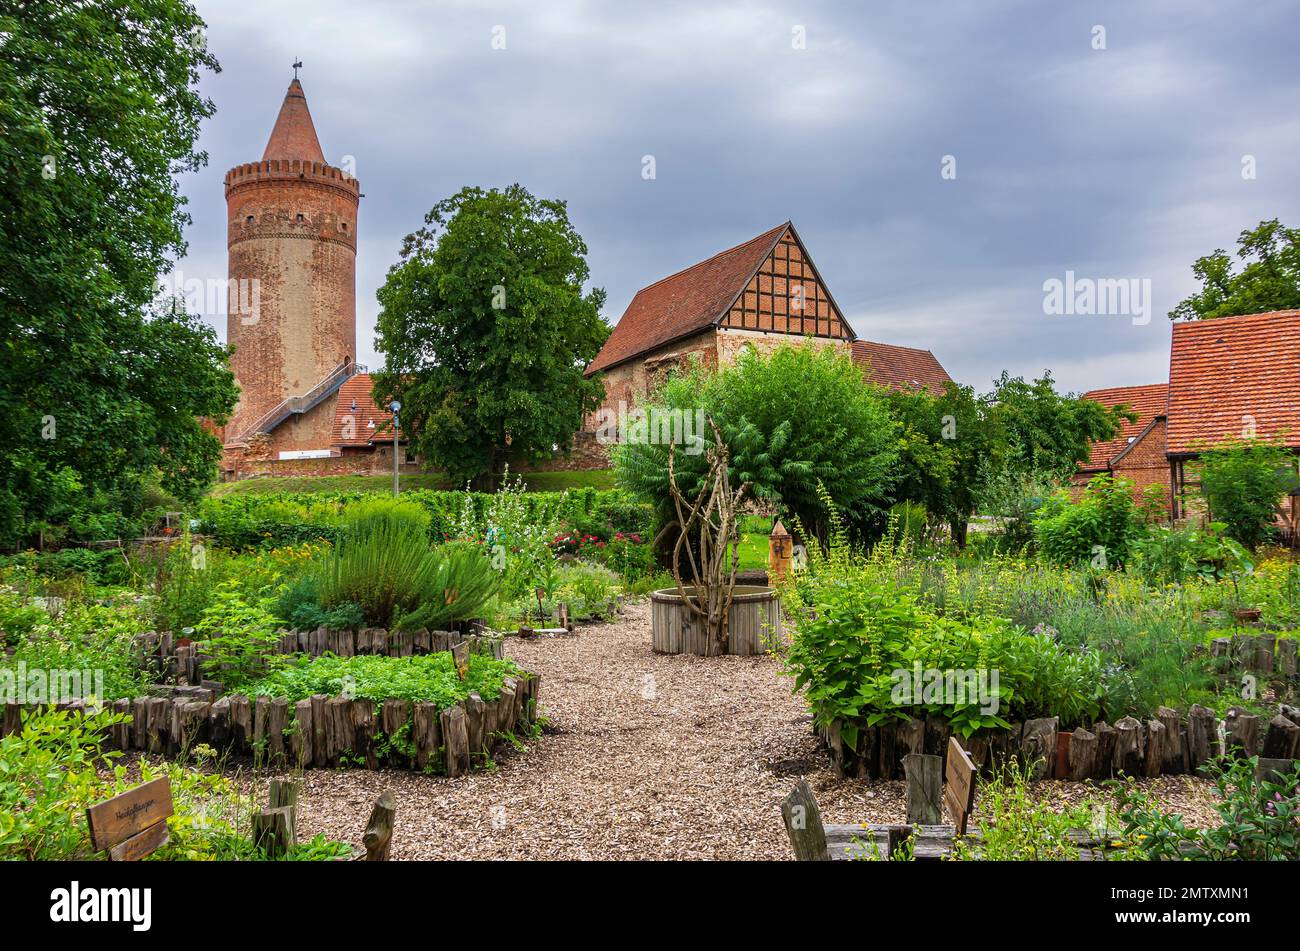 Herb garden and castle buildings of Stargard Castle, a 12th century medieval hilltop castle, in Burg Stargard, Mecklenburg-Western Pomerania, Germany. Stock Photo